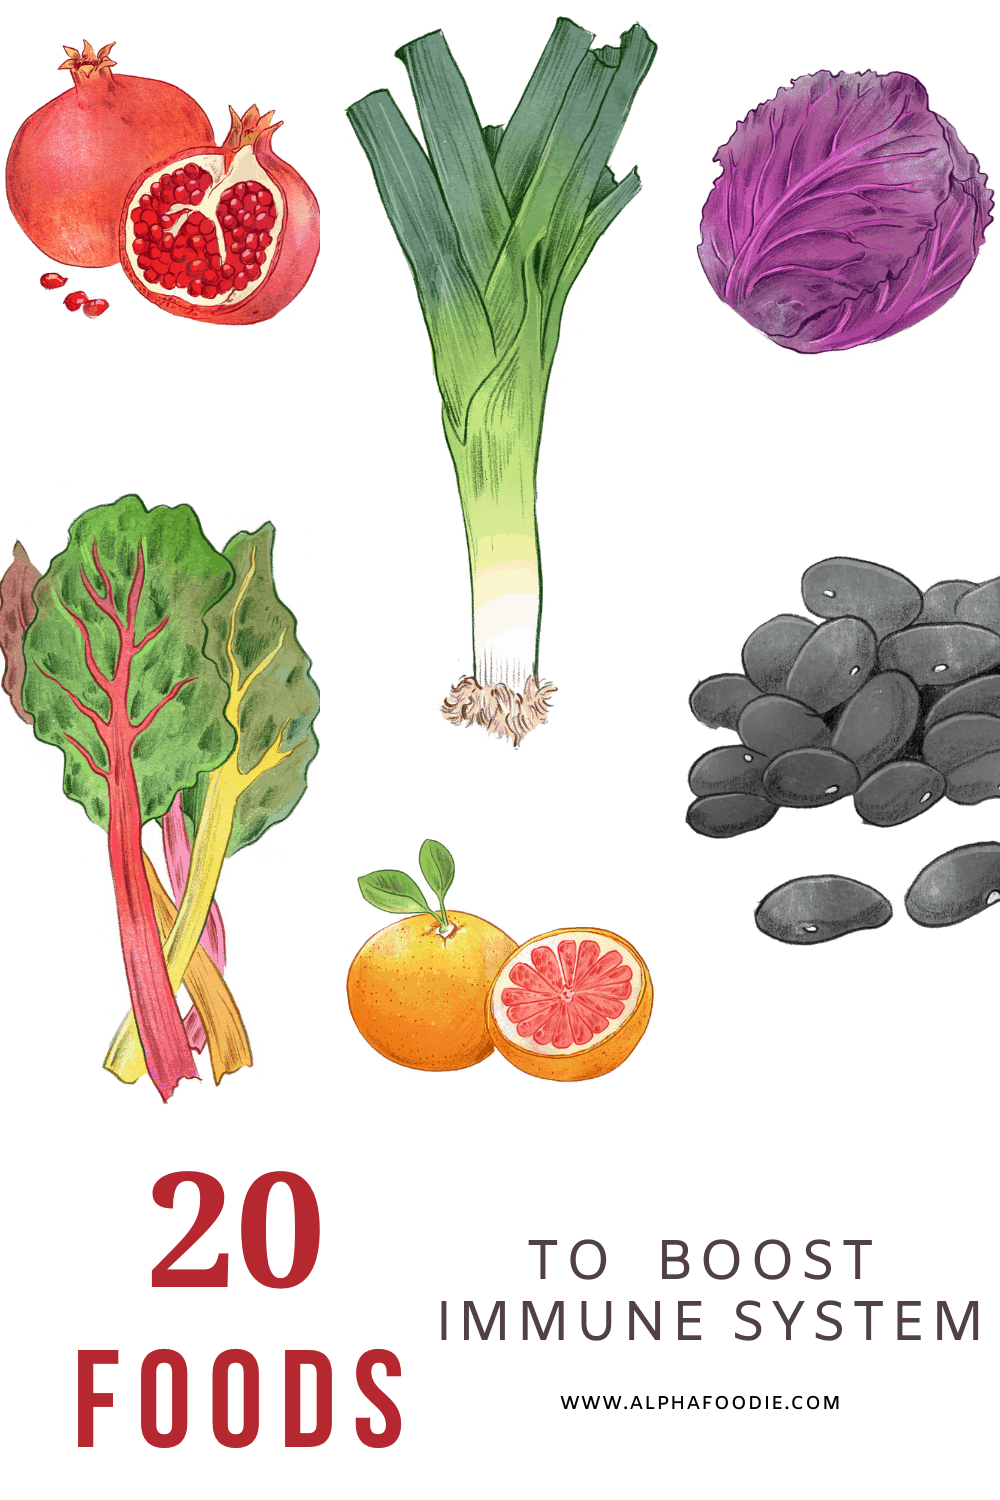 20 Immune Boosting Foods